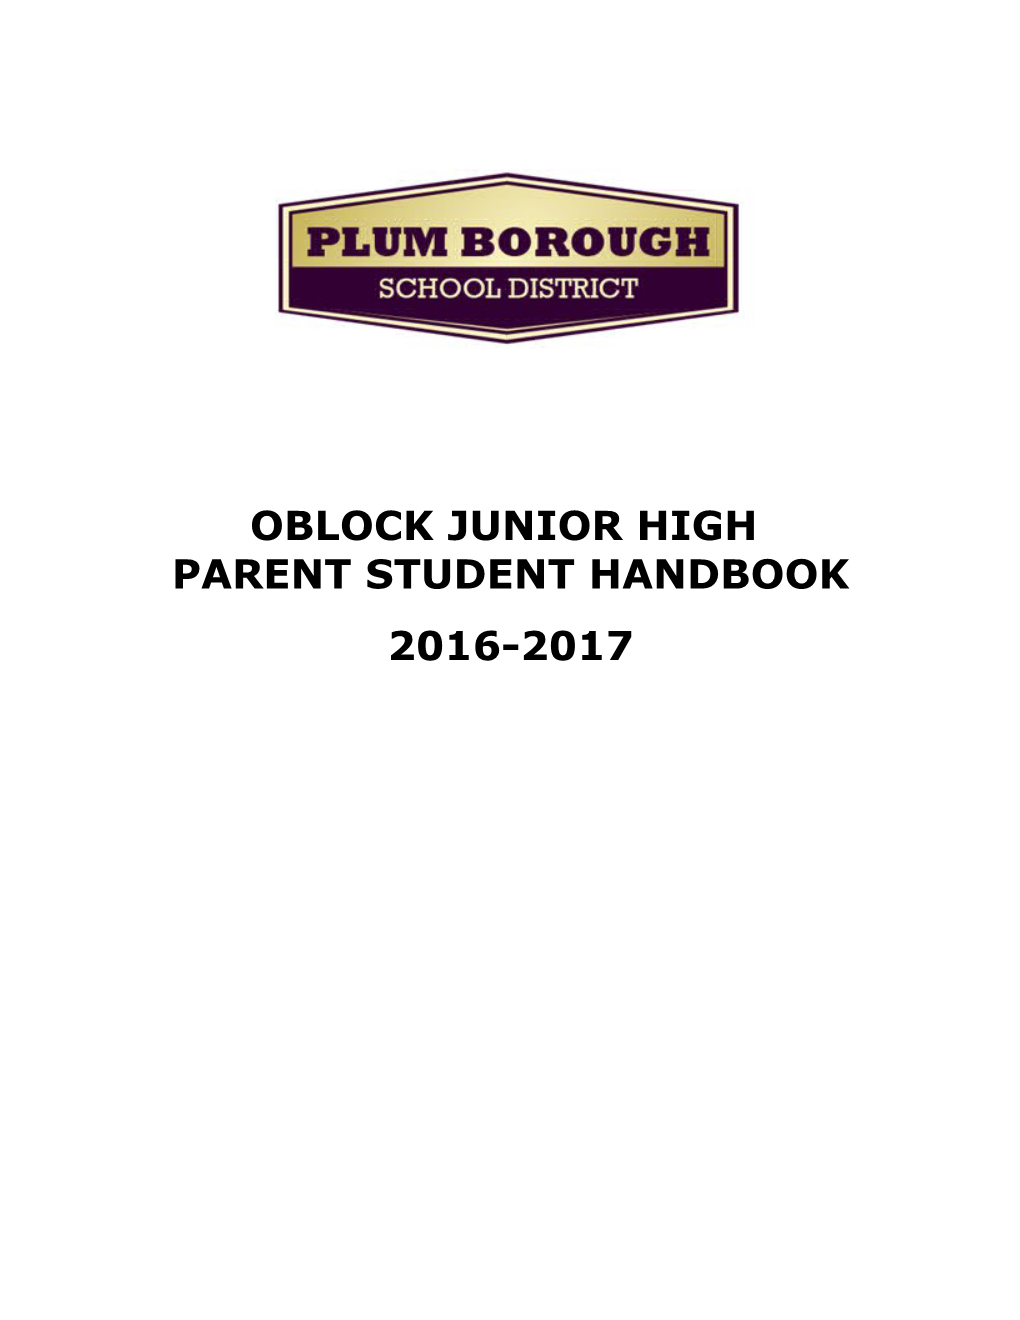 Oblock Junior High